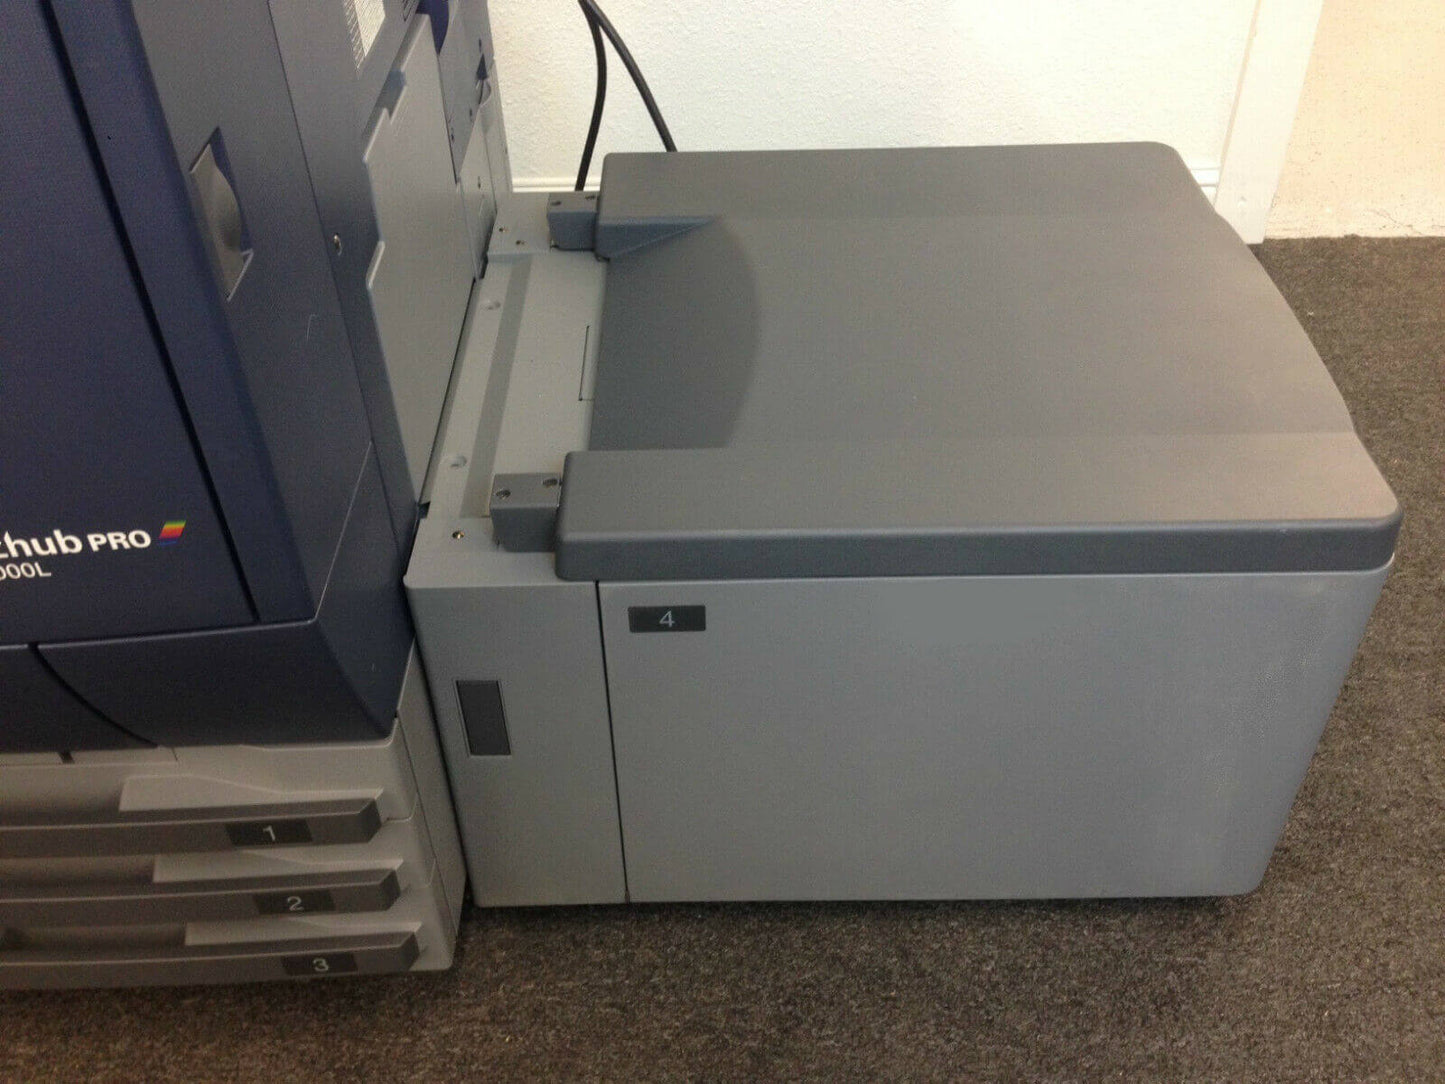 Konica Minolta Bizhub Pro C6000L Copier Printer Scanner Finisher LCT, only 122k - copier-clearance-center